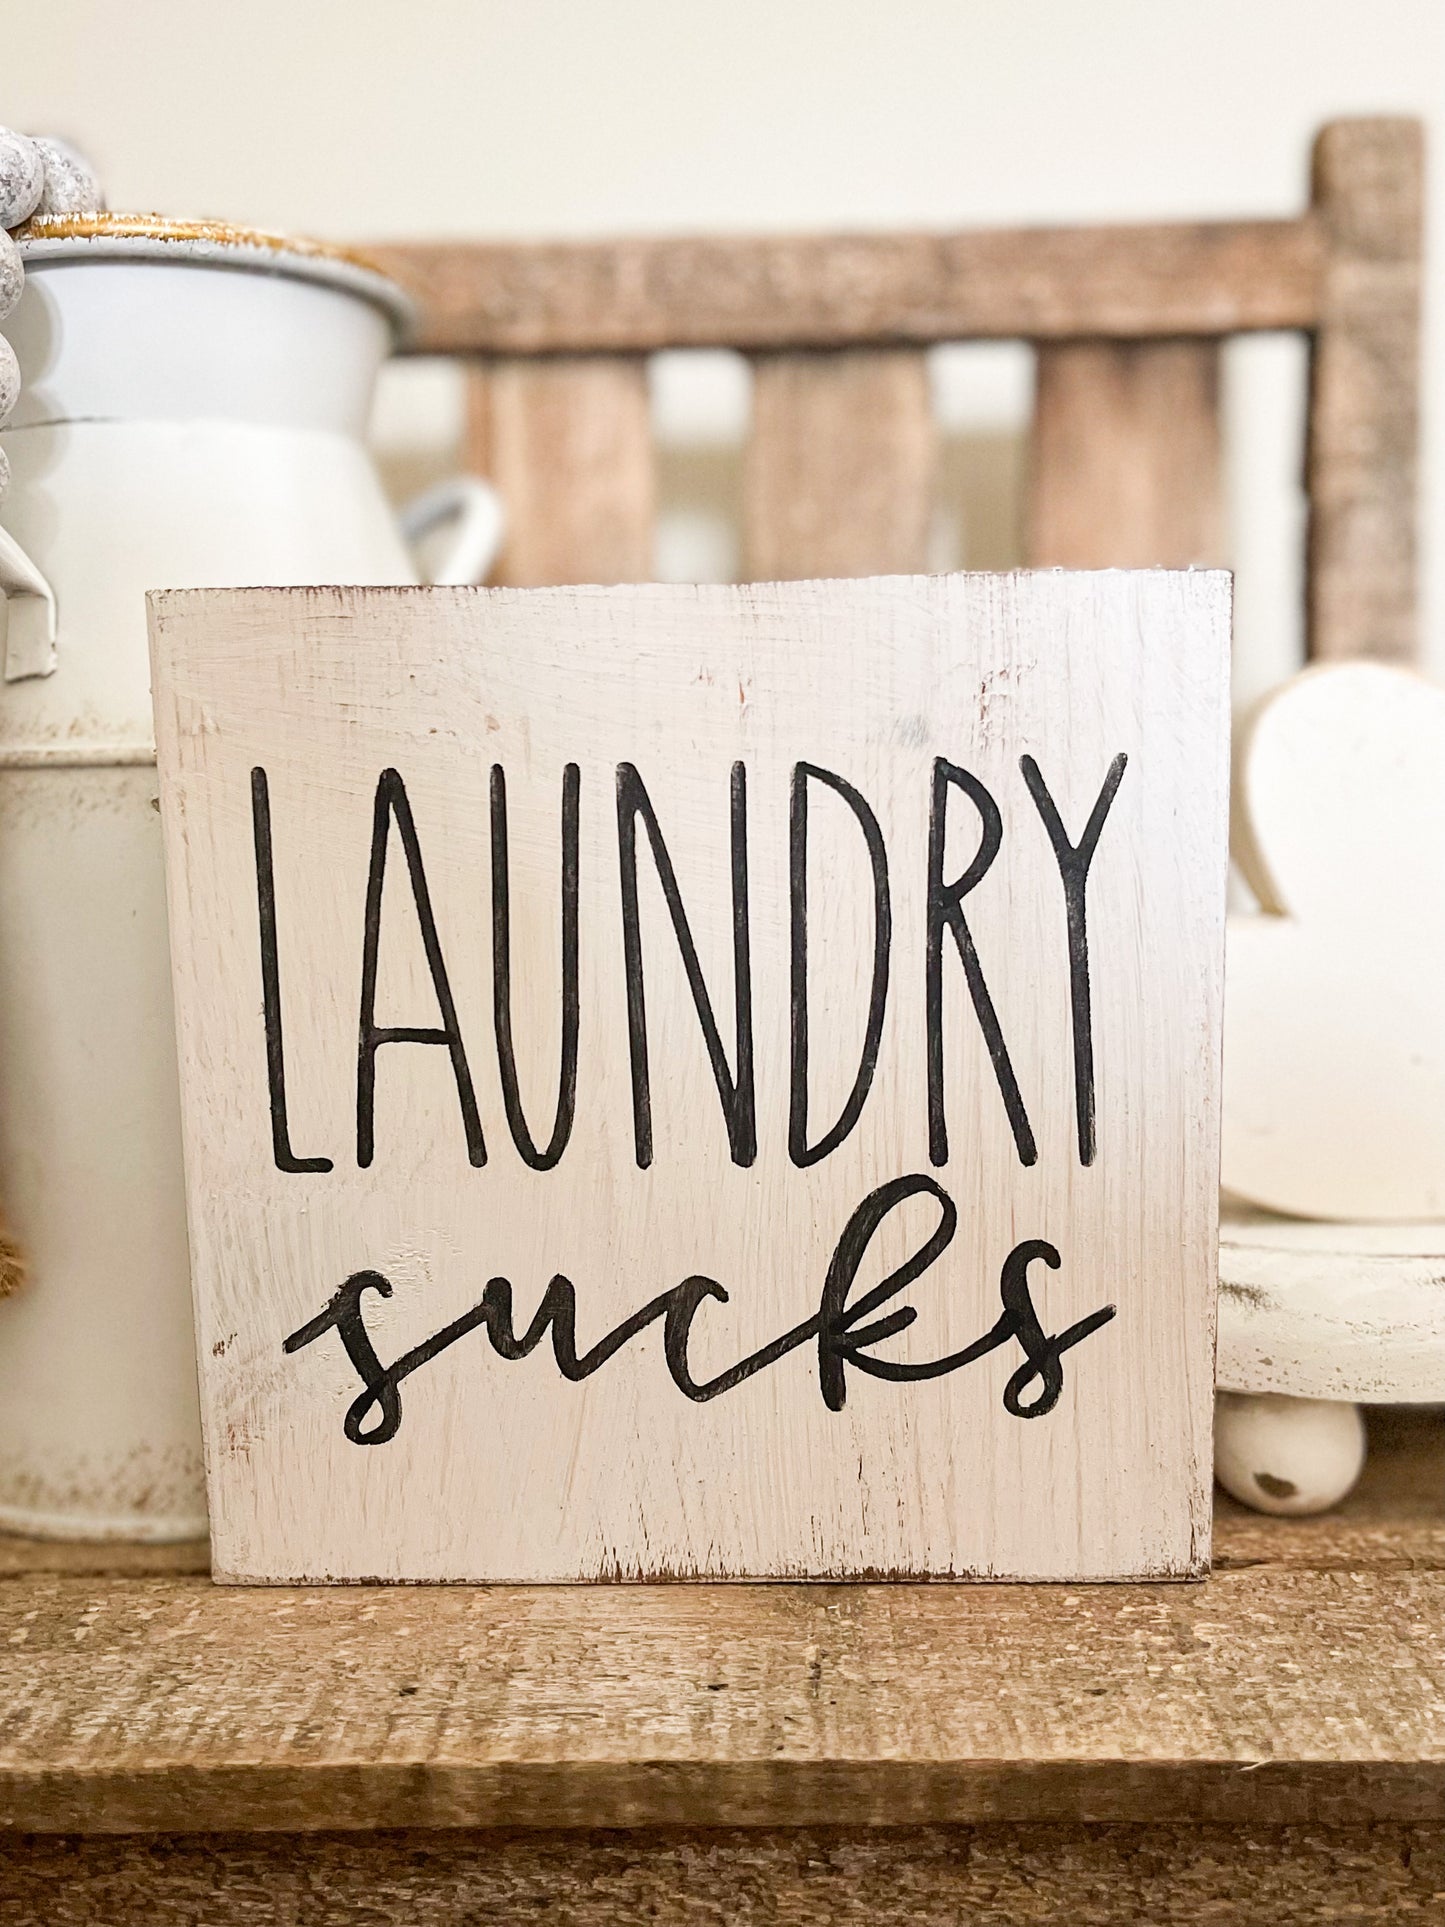 Laundry sucks sign